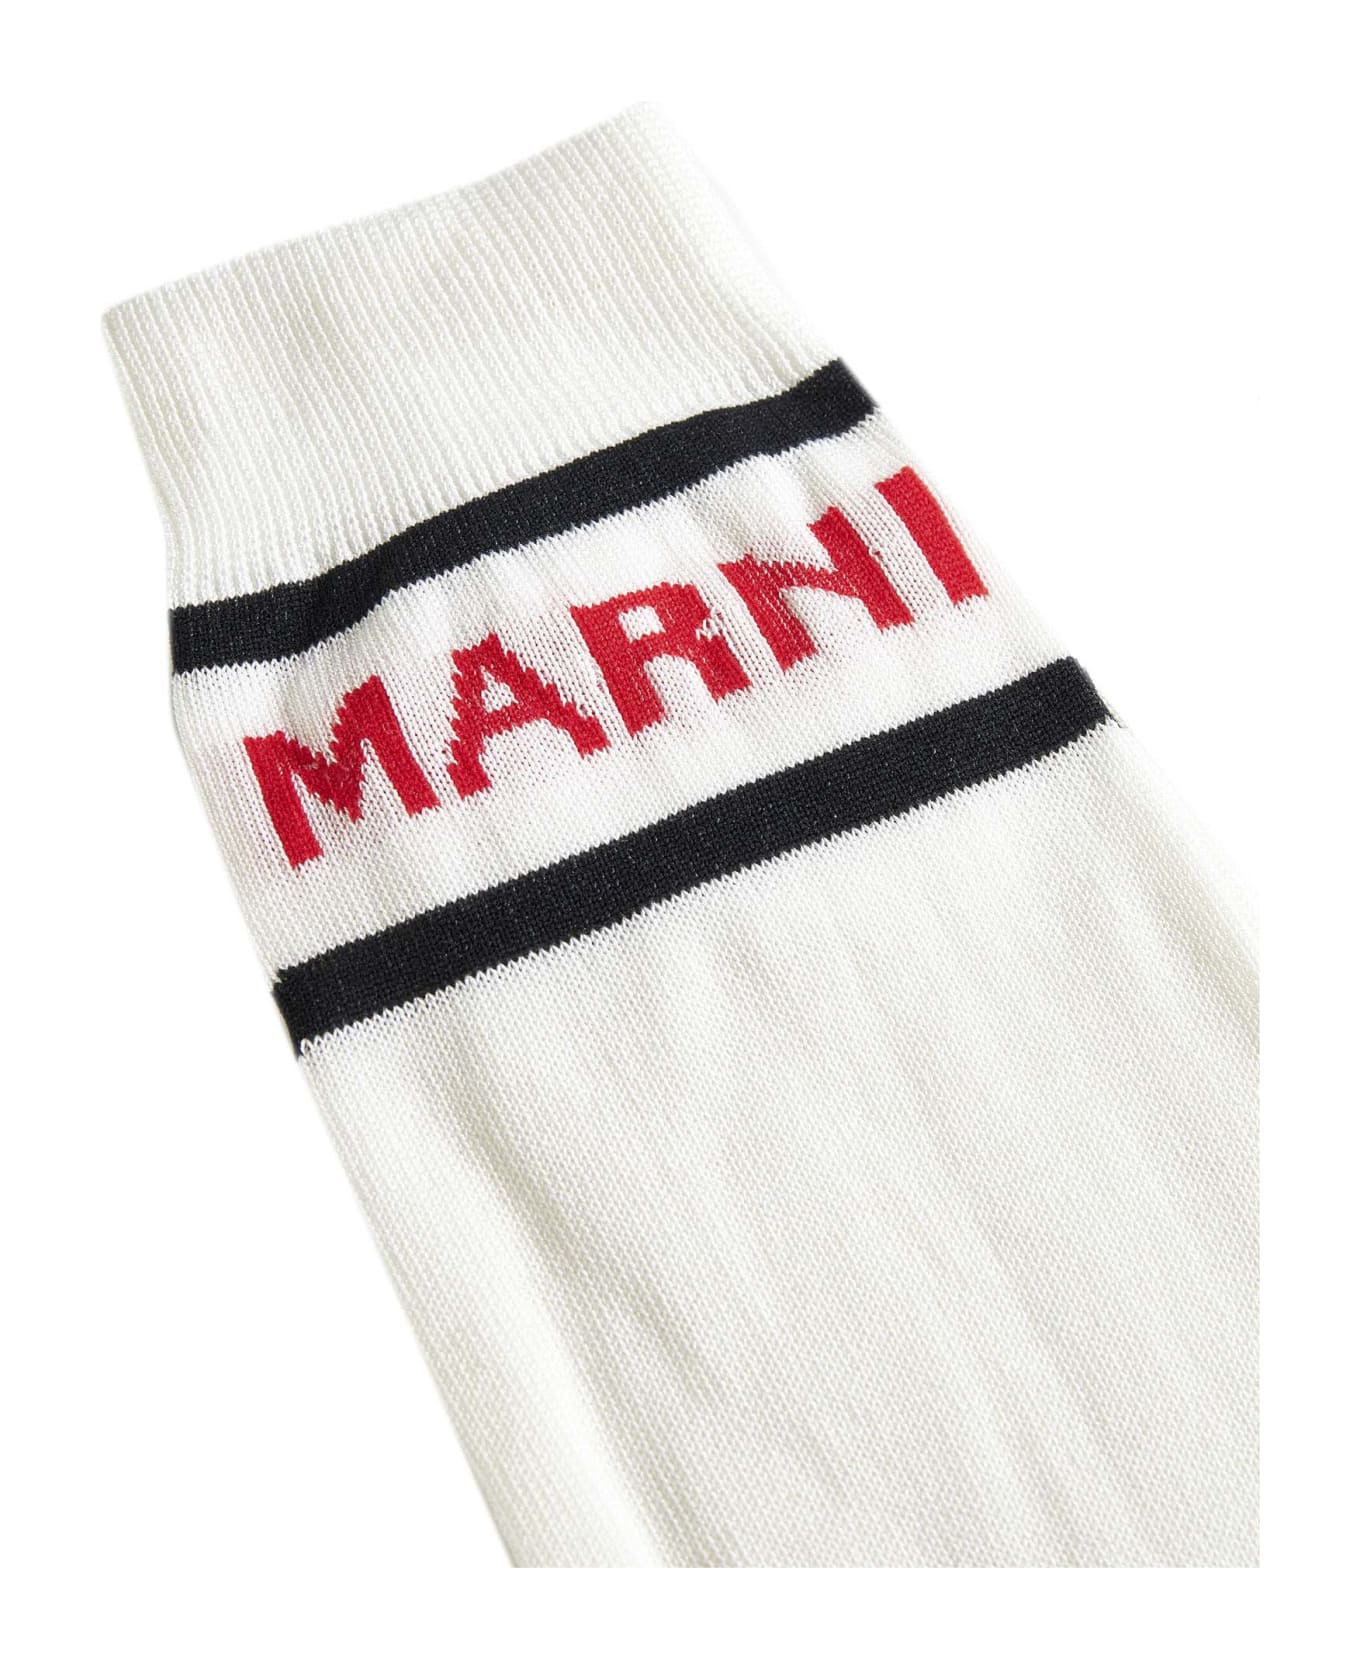 Marni Socks - Lily white